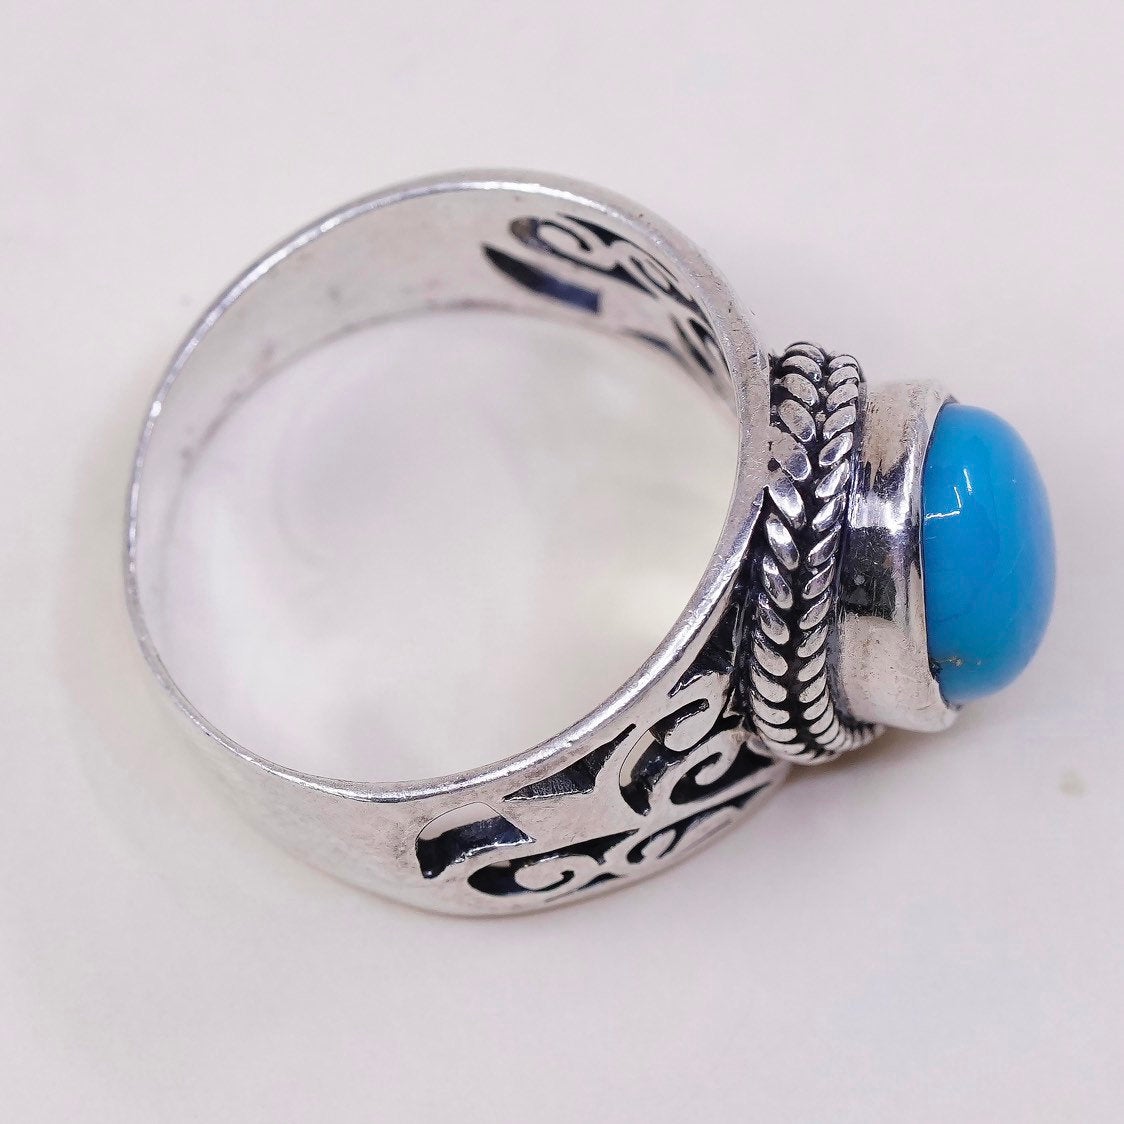 sz 10, vtg sterling silver ring, handmade 925 ring w/ turquoise n Filigree